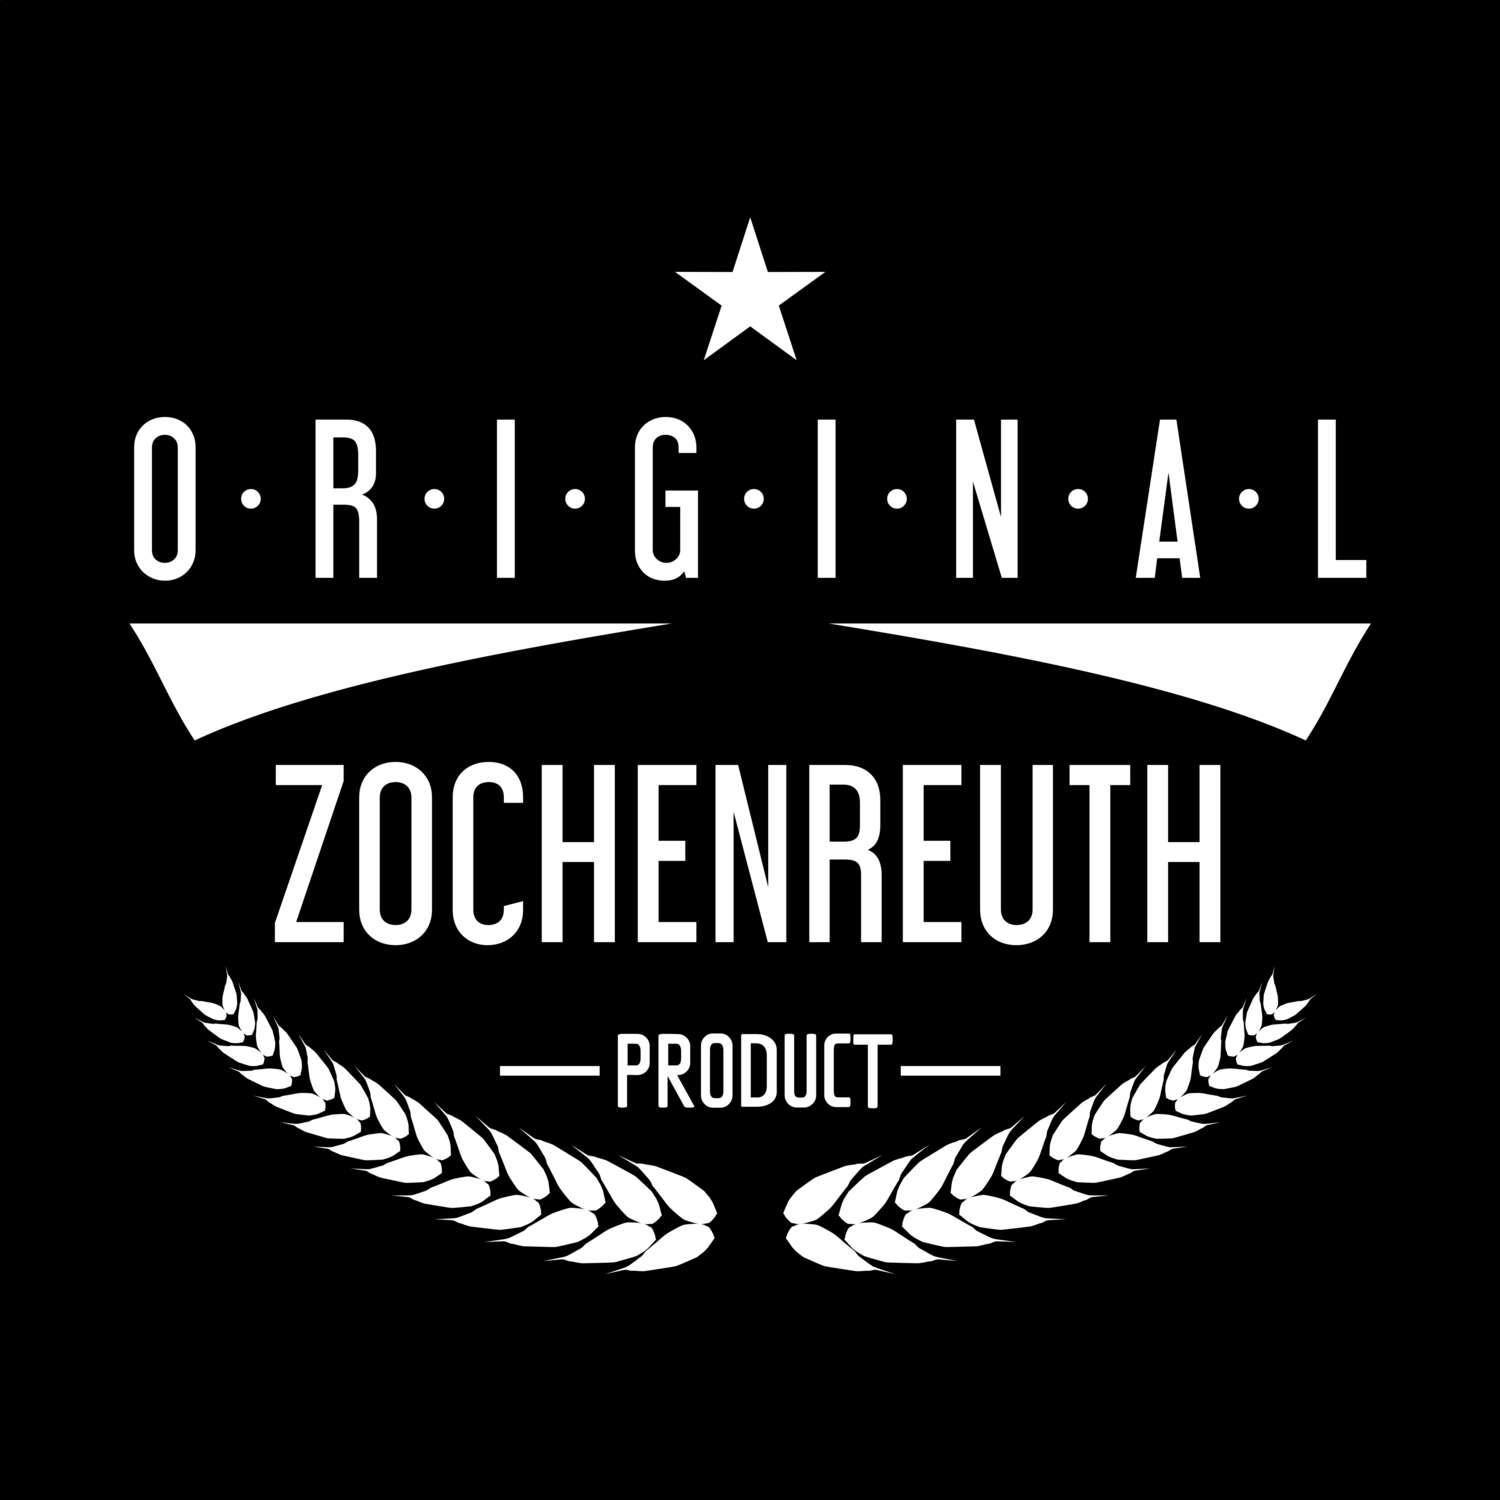 Zochenreuth T-Shirt »Original Product«